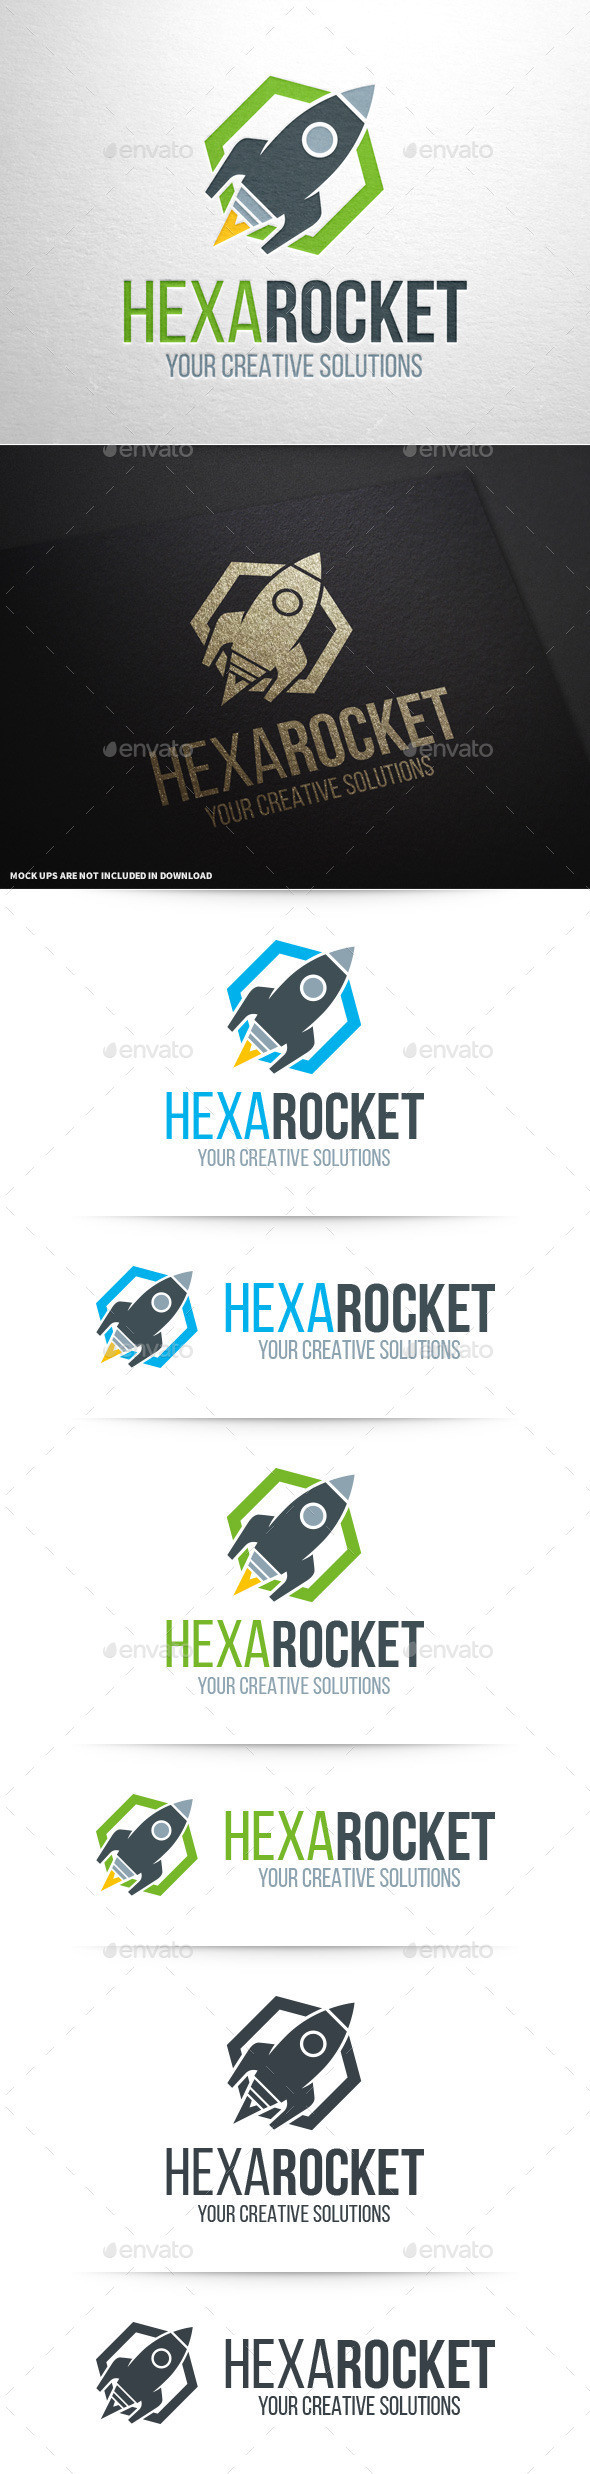 Hexa rocket logo template